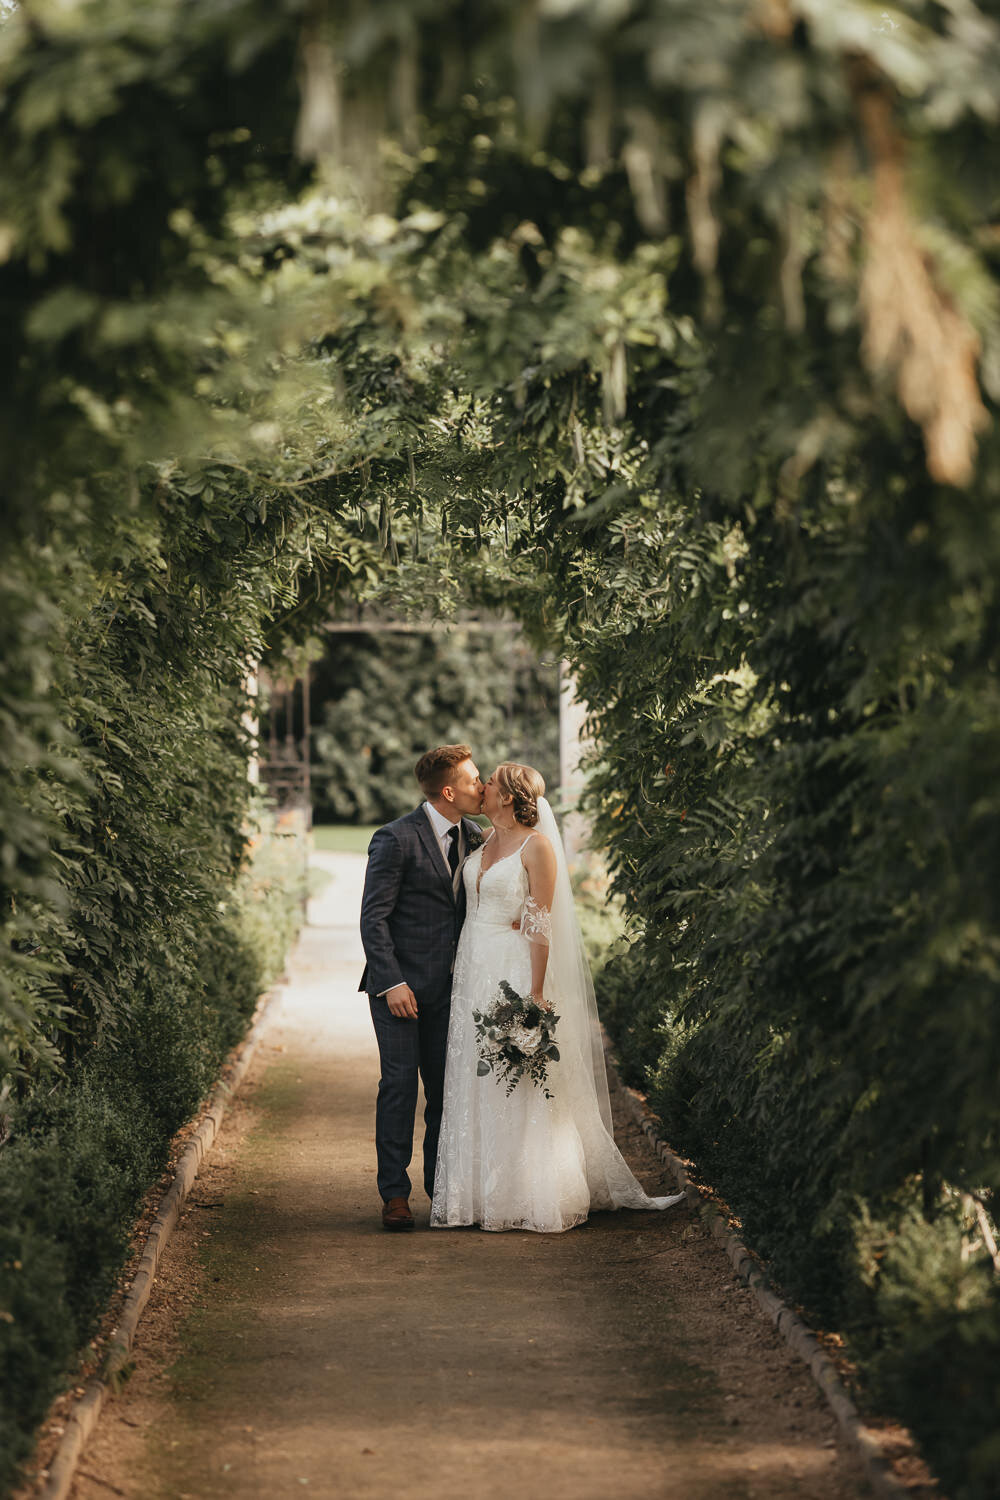 Thorpe Garden Wedding Photography -34.jpg